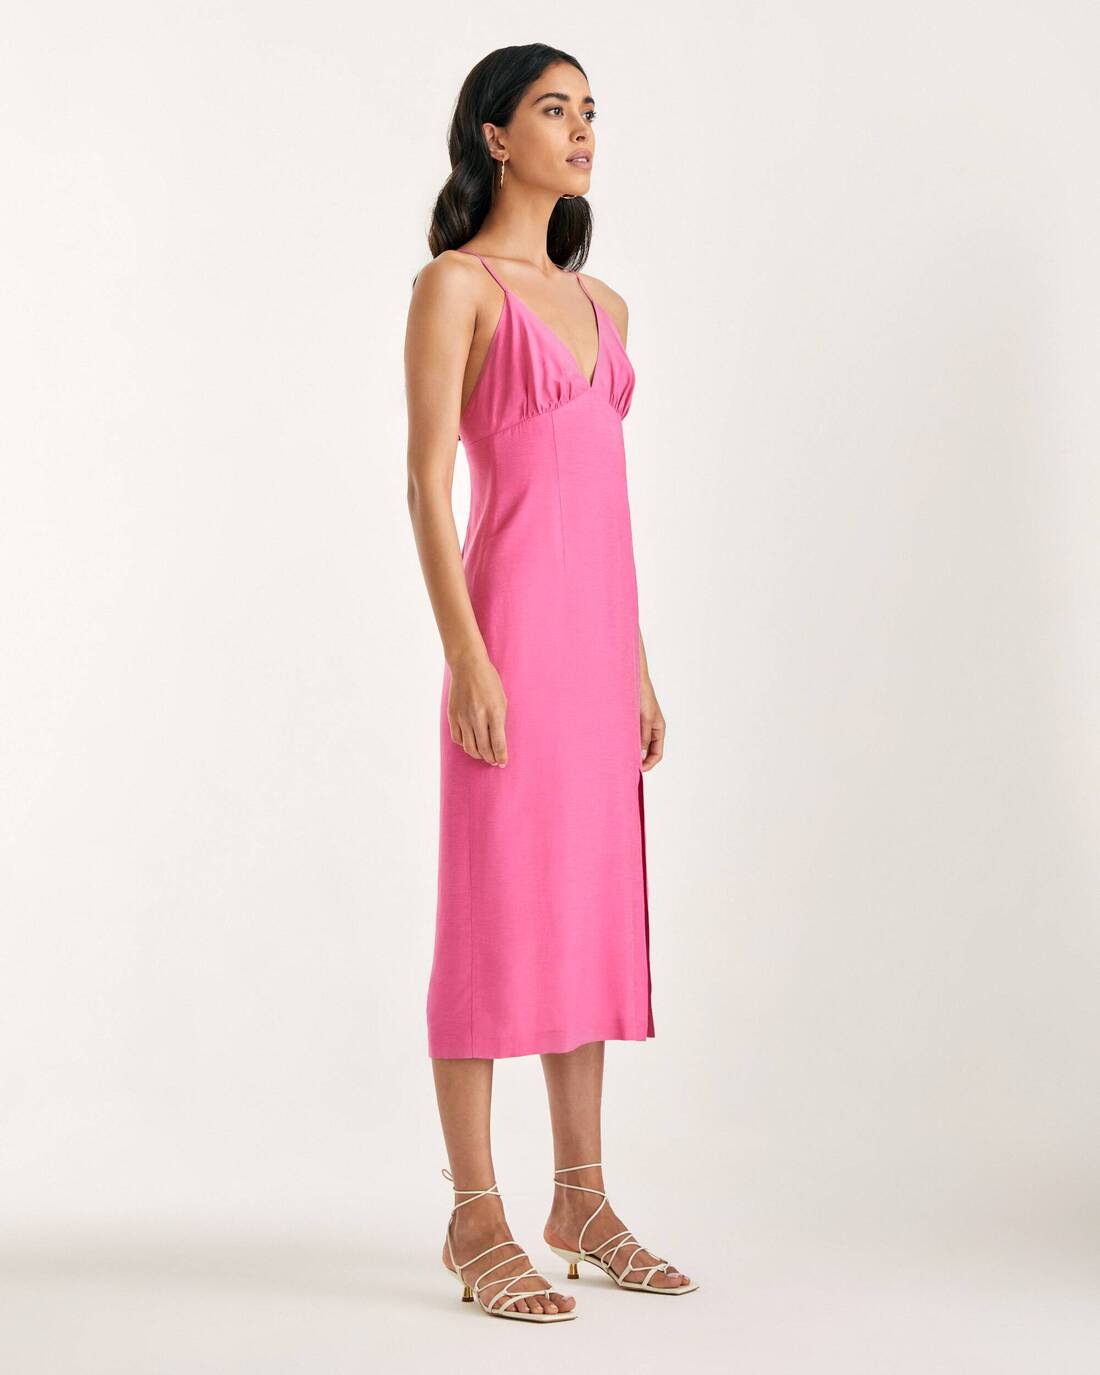 Midi length pinafore dress